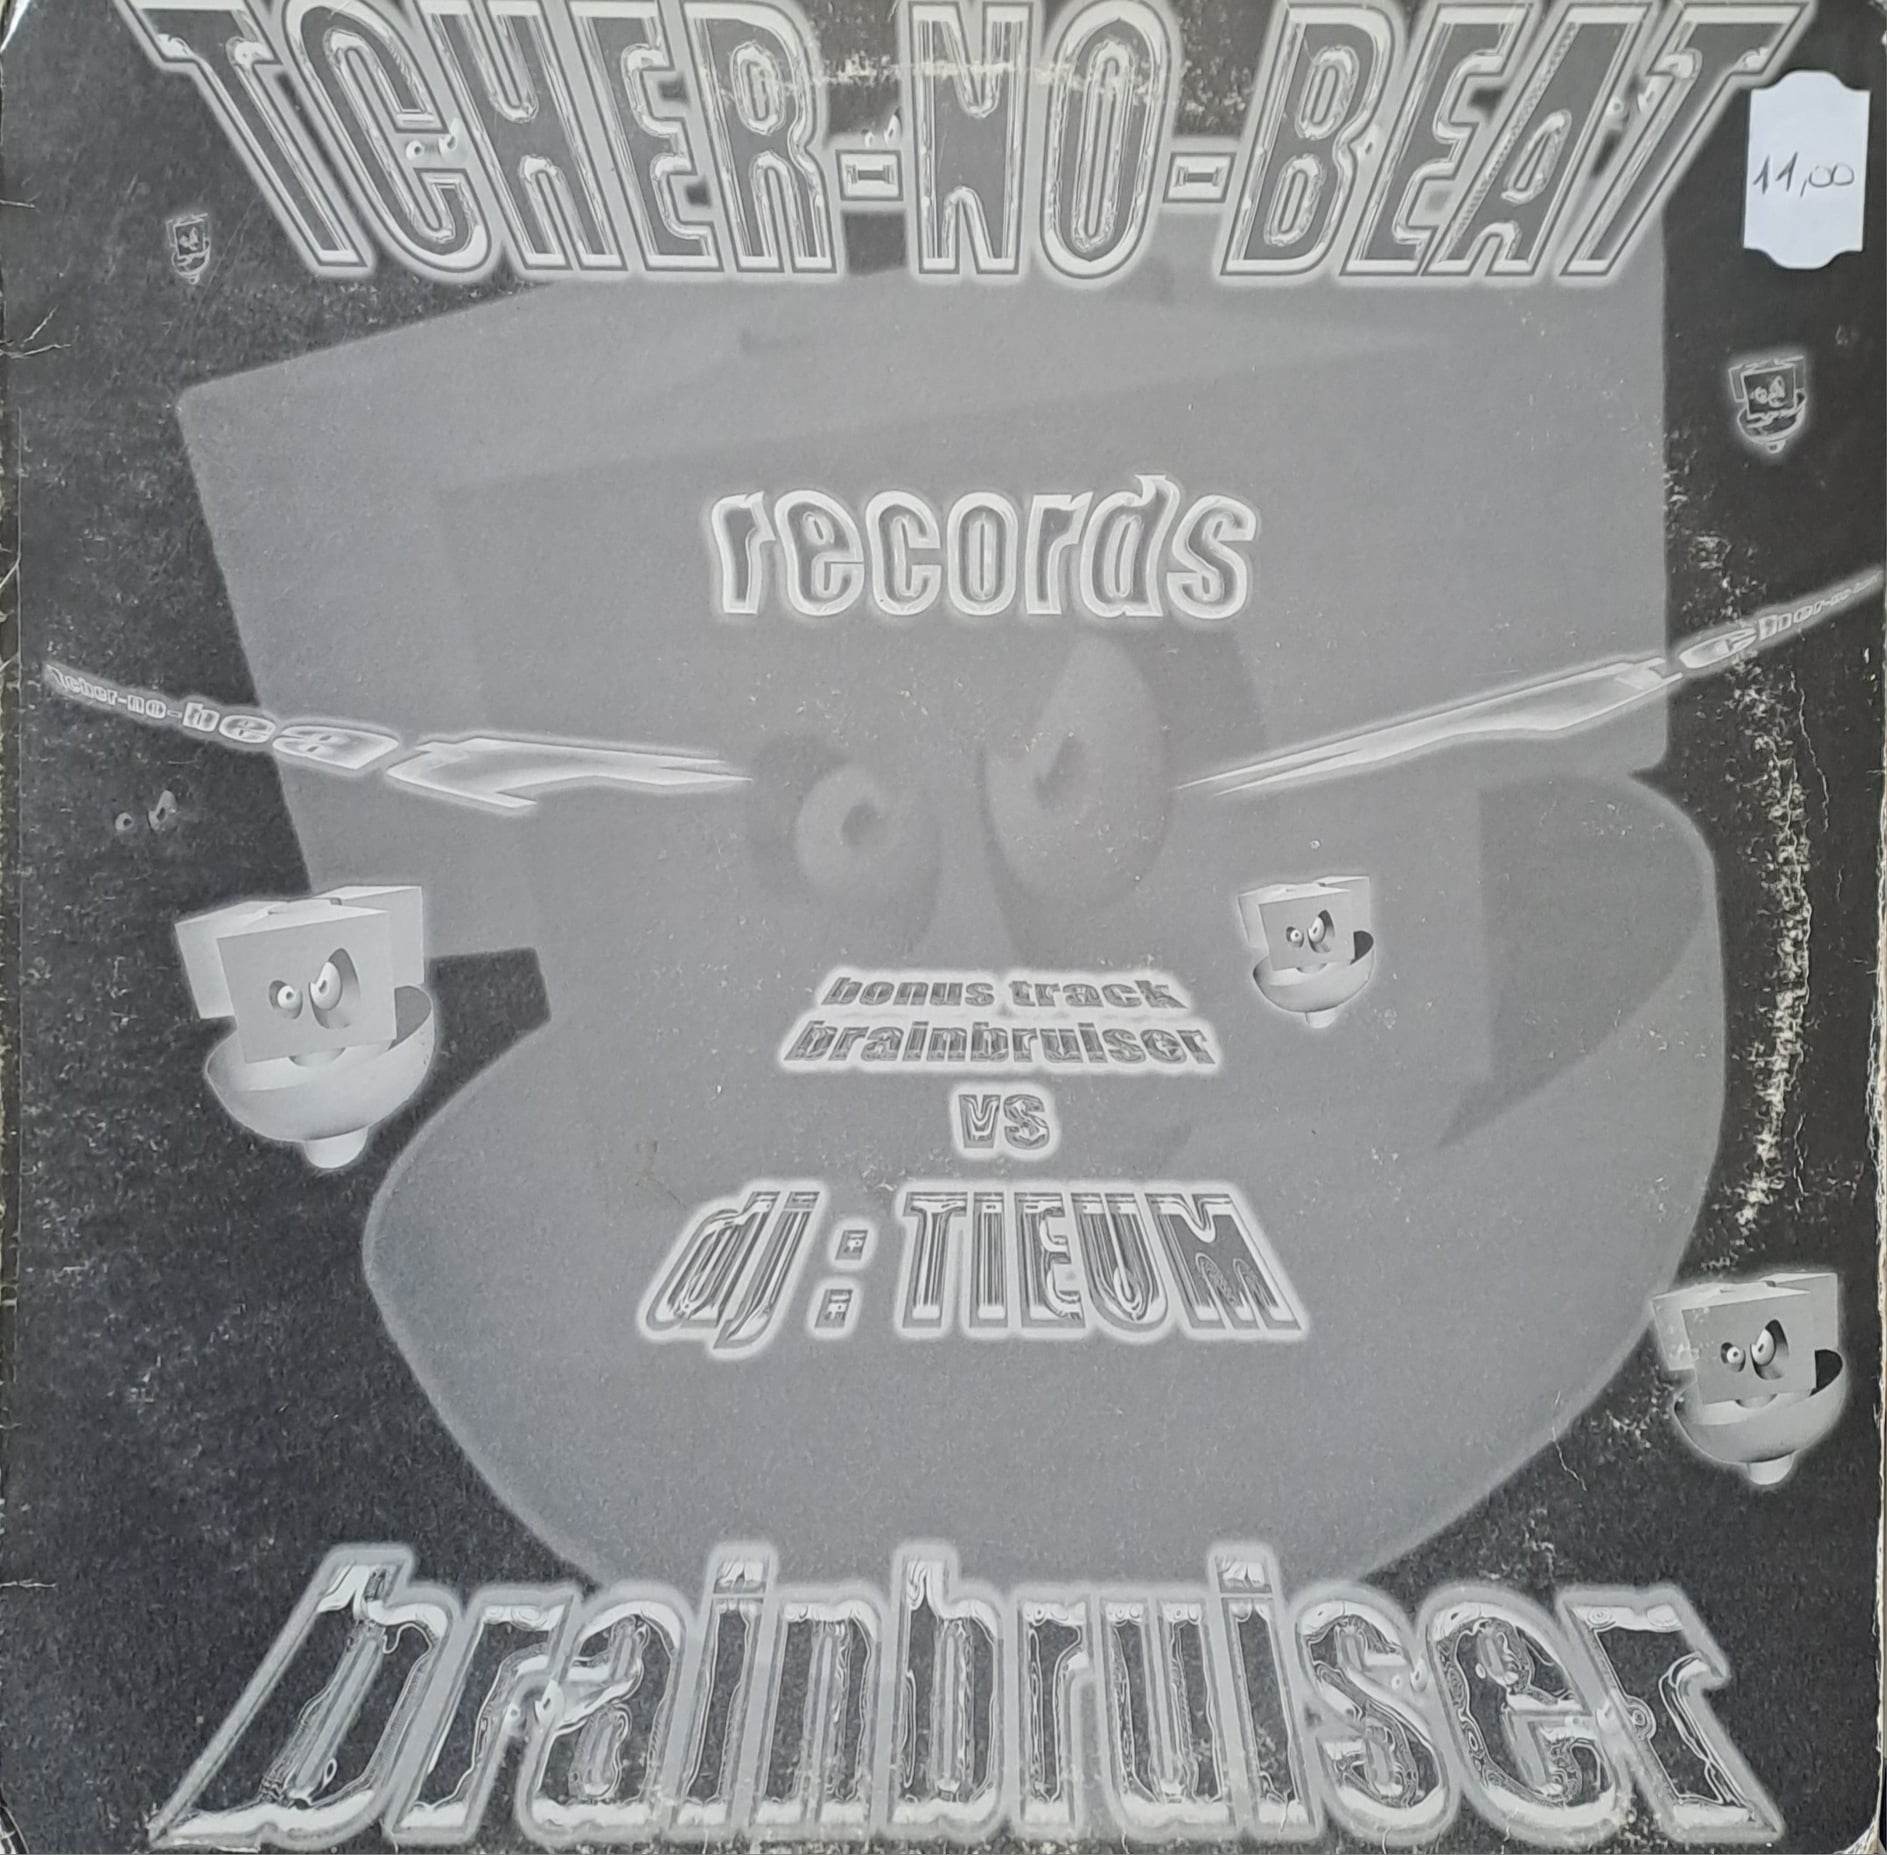 Tcher No Beat 08 - vinyle hardcore